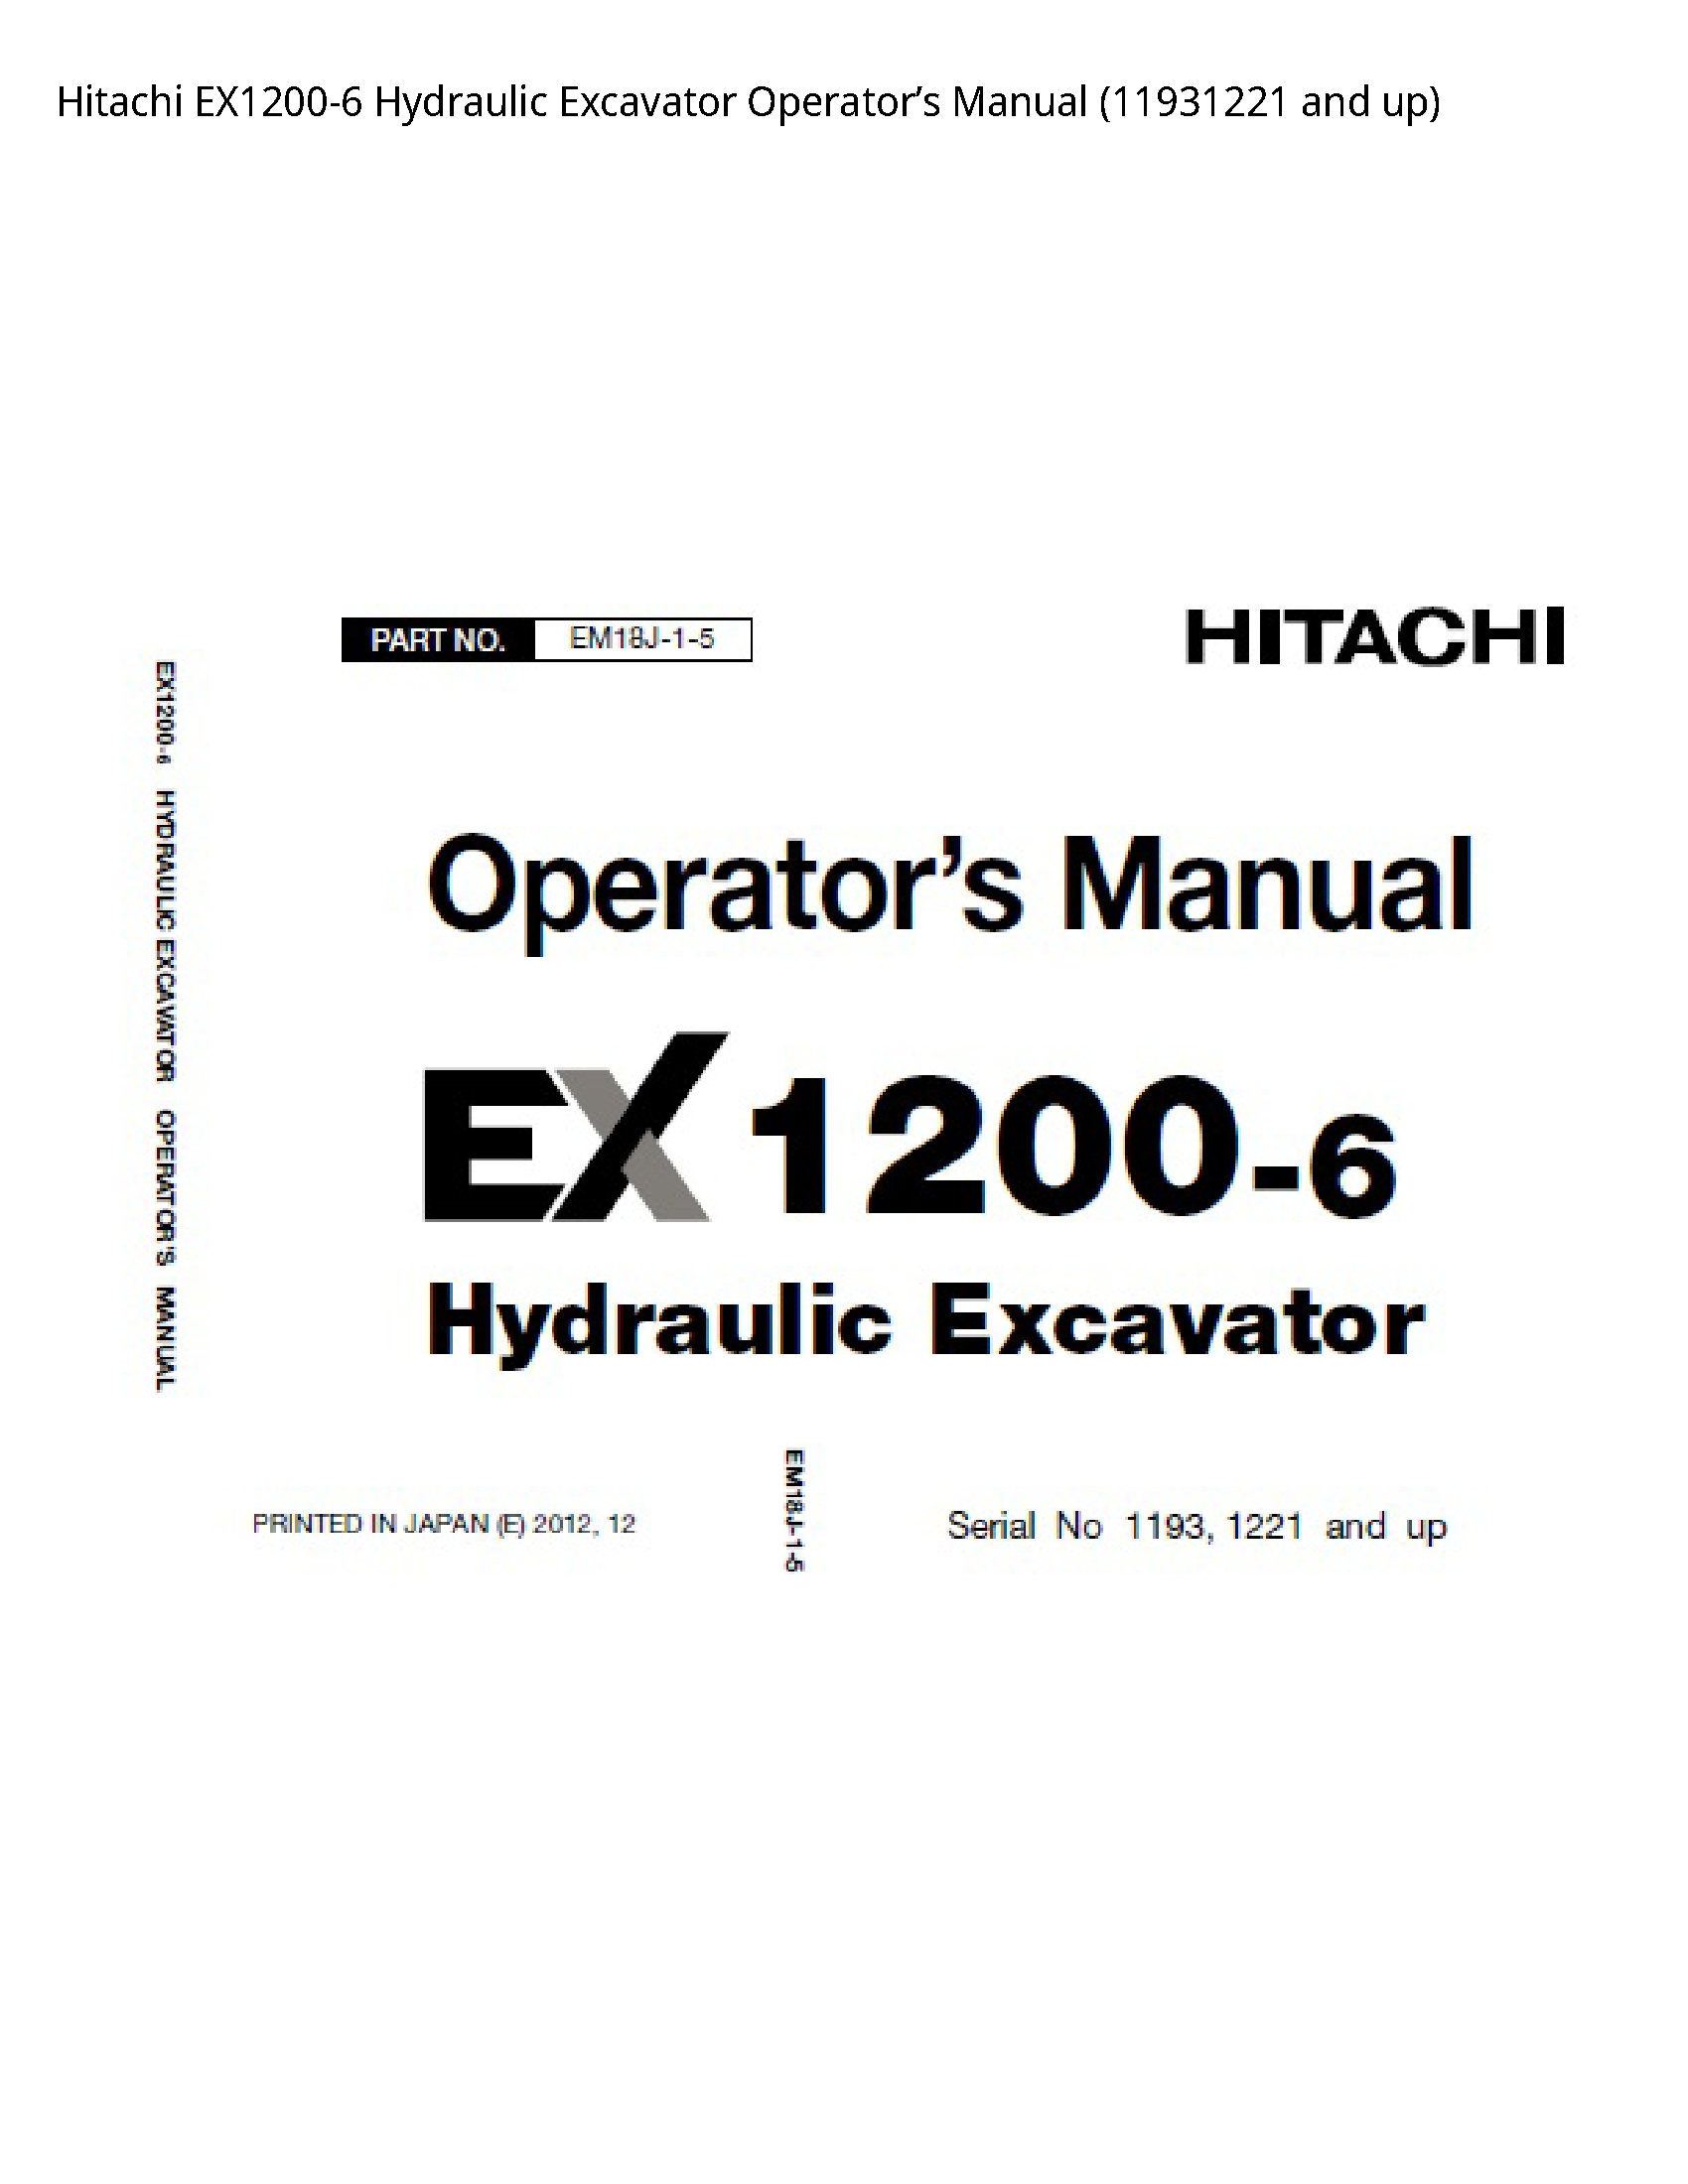 Hitachi EX1200-6 Hydraulic Excavator Operator’s manual